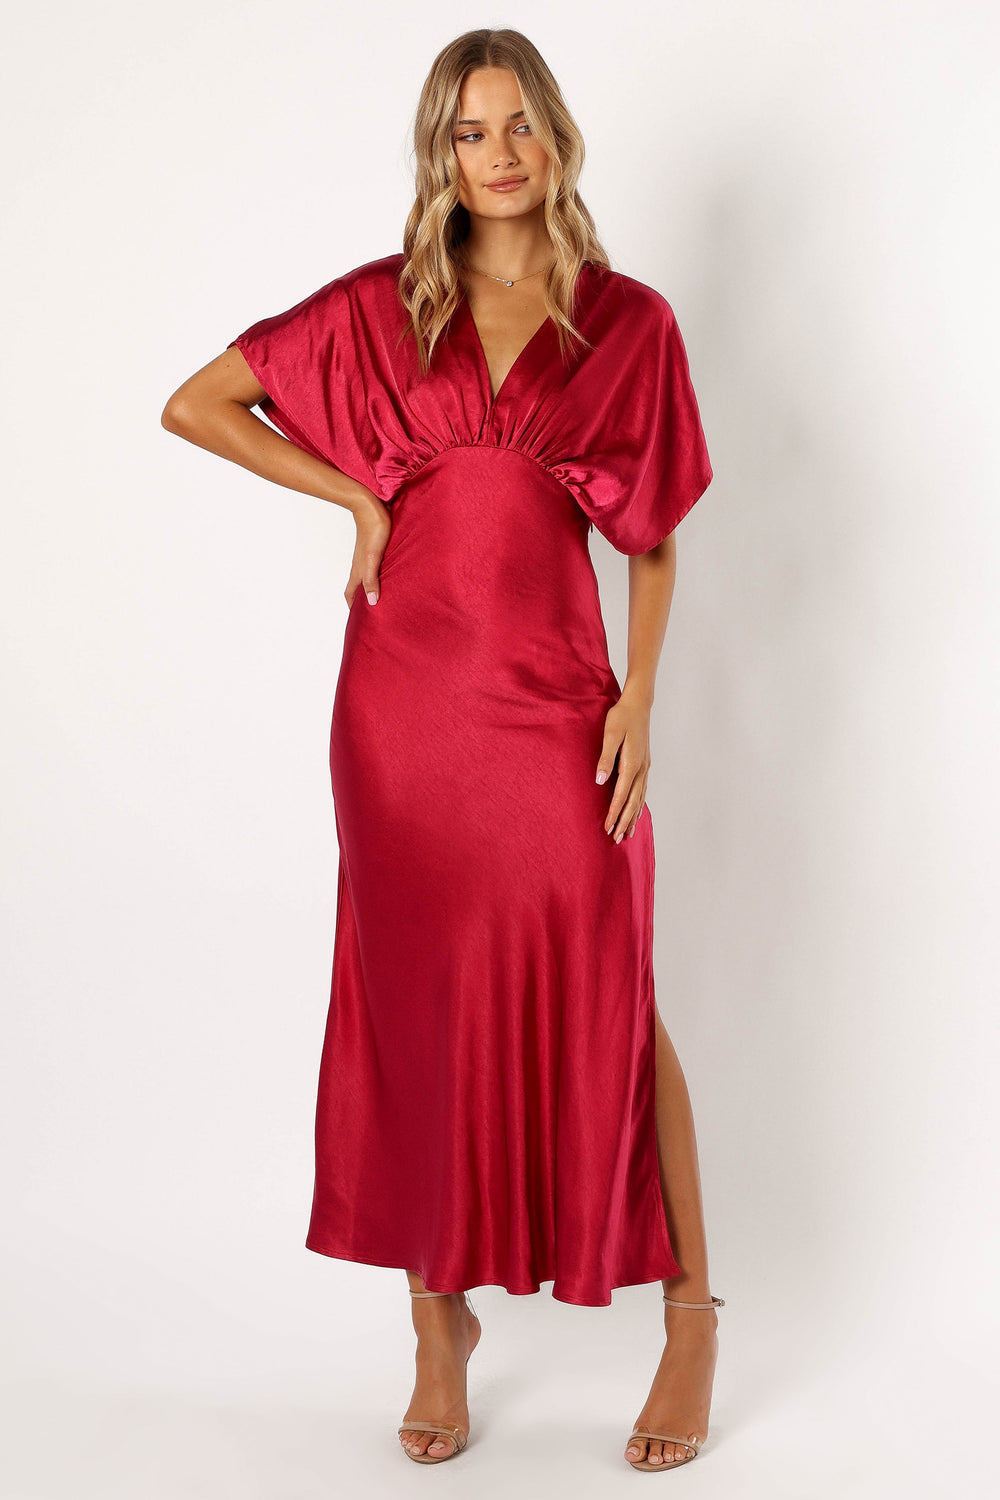 Petal and Pup USA DRESSES Ricki Maxi Dress - Ruby Wine